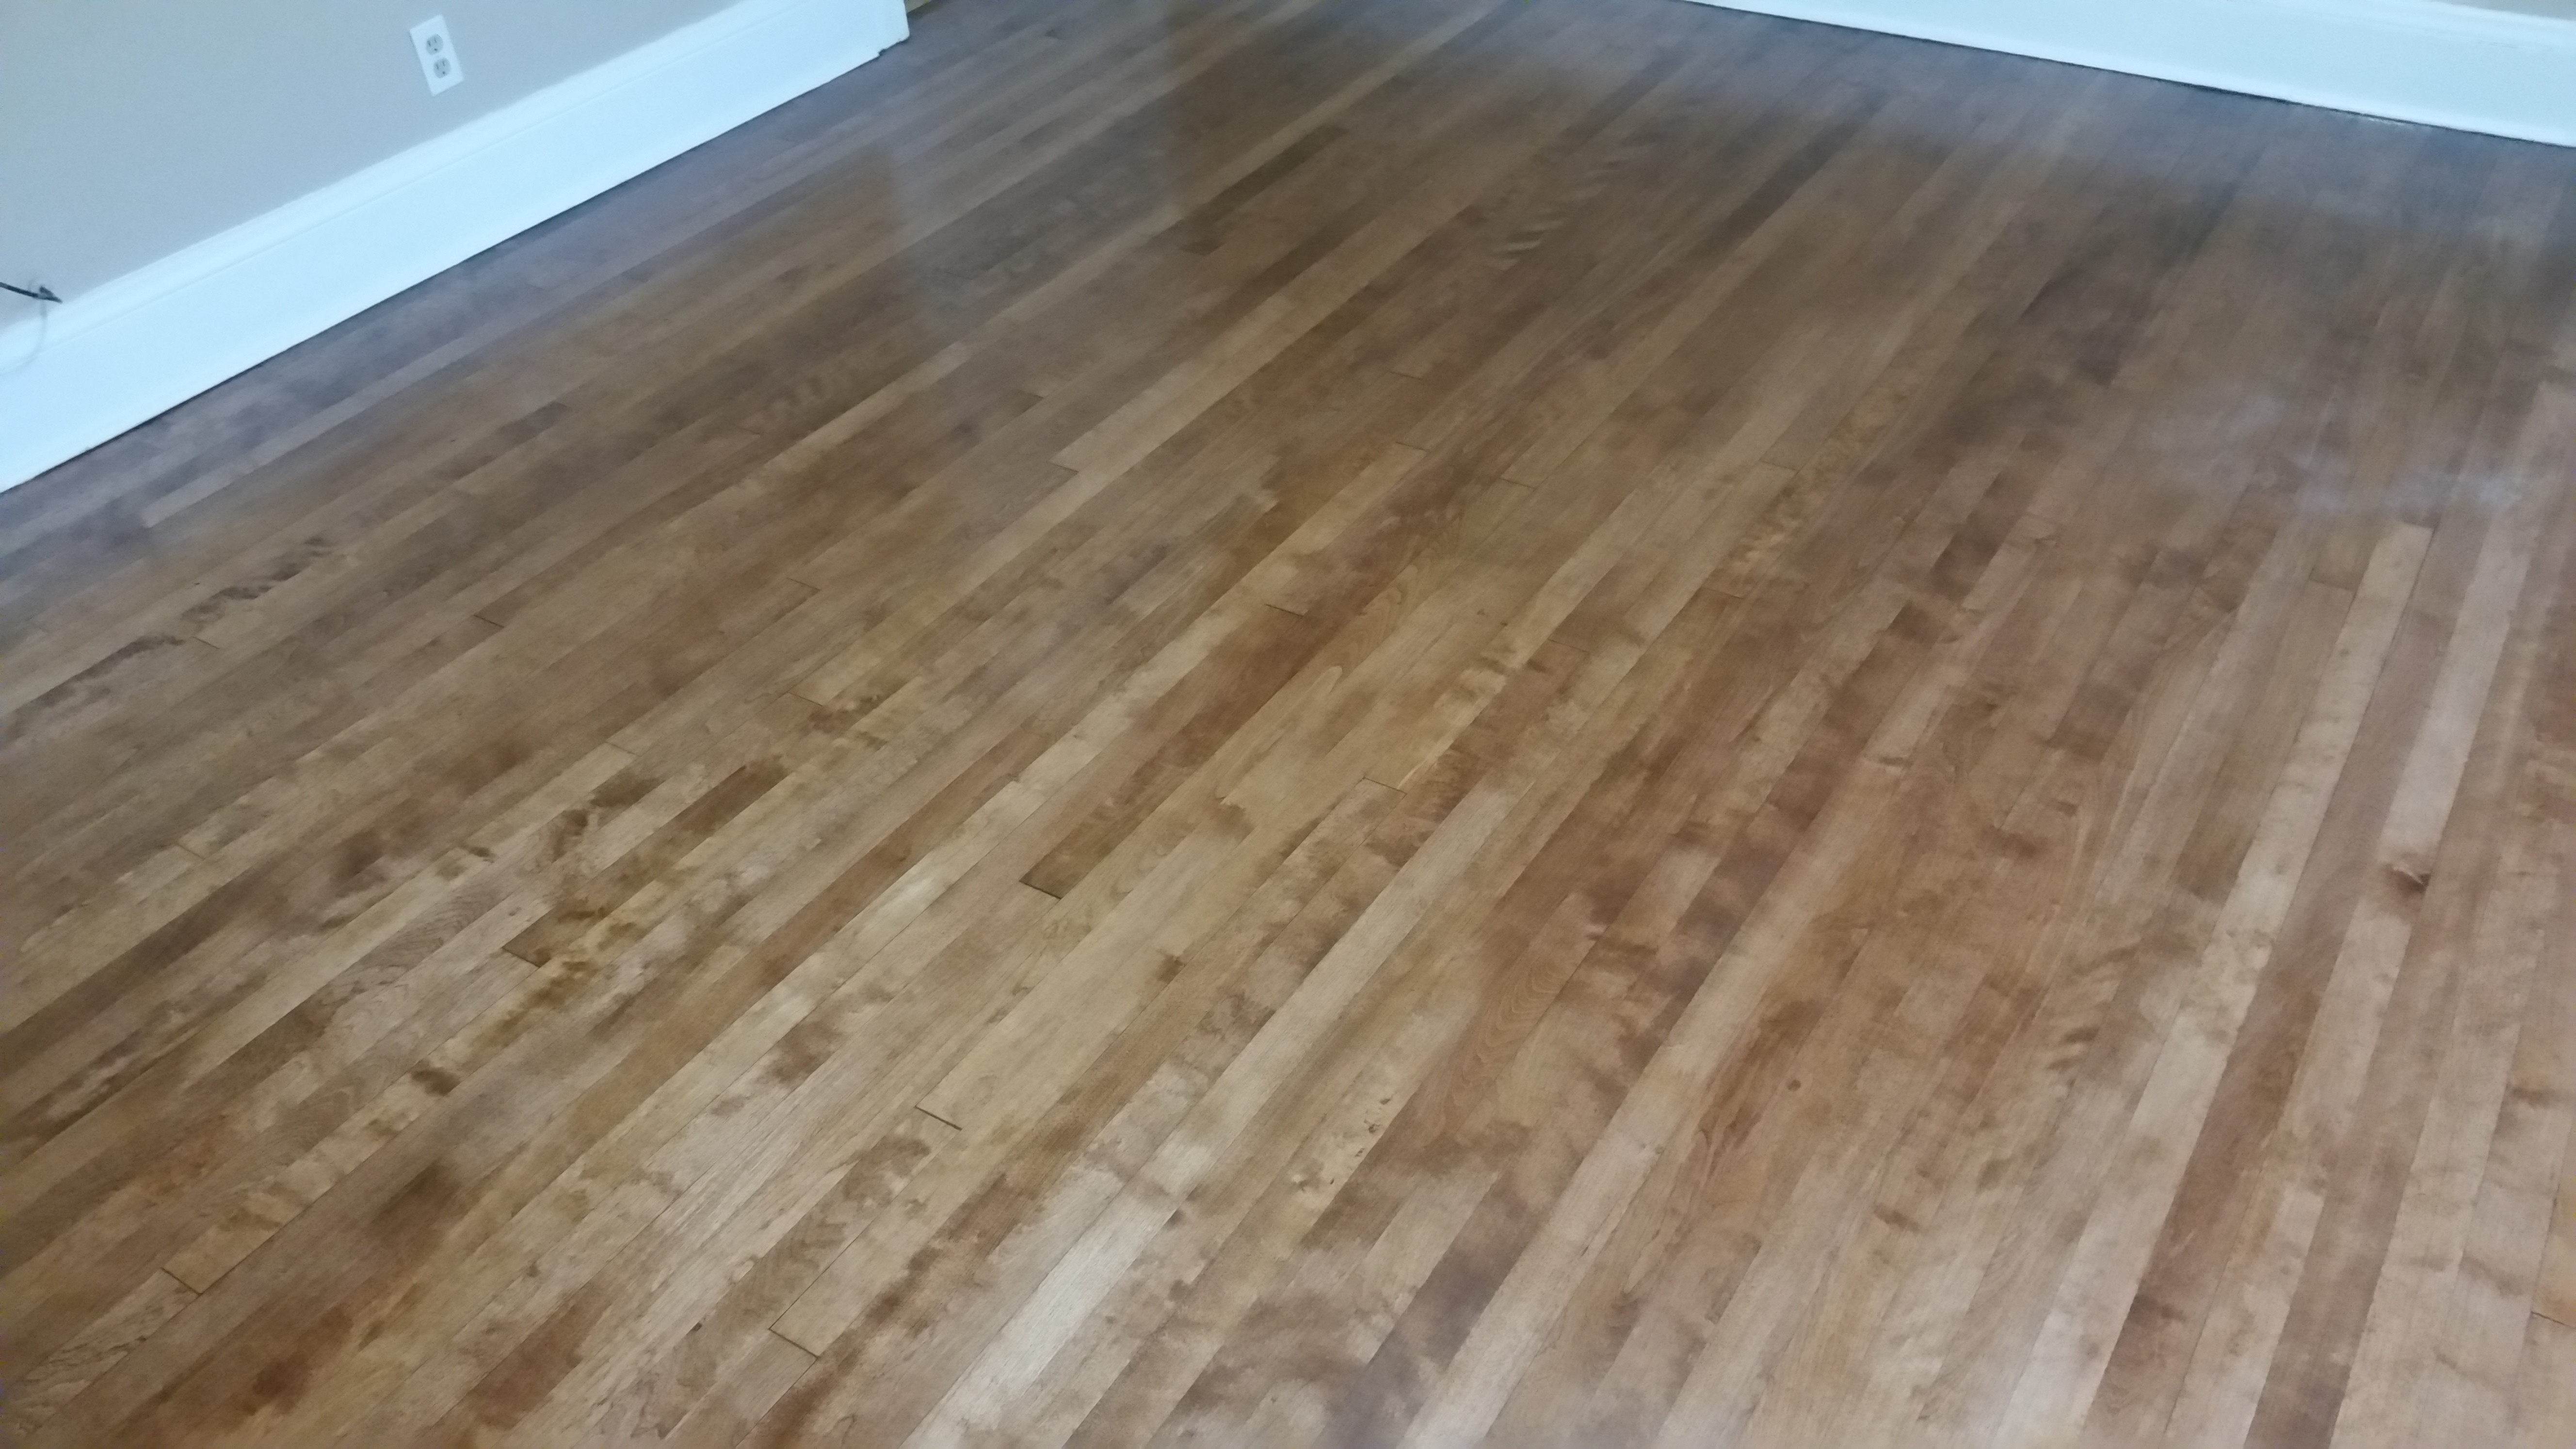 Hardwood Floor Restoration Services Of Rochester Hardwood Floors Of Utica Home for 20151028 104648 20160520 161308resize